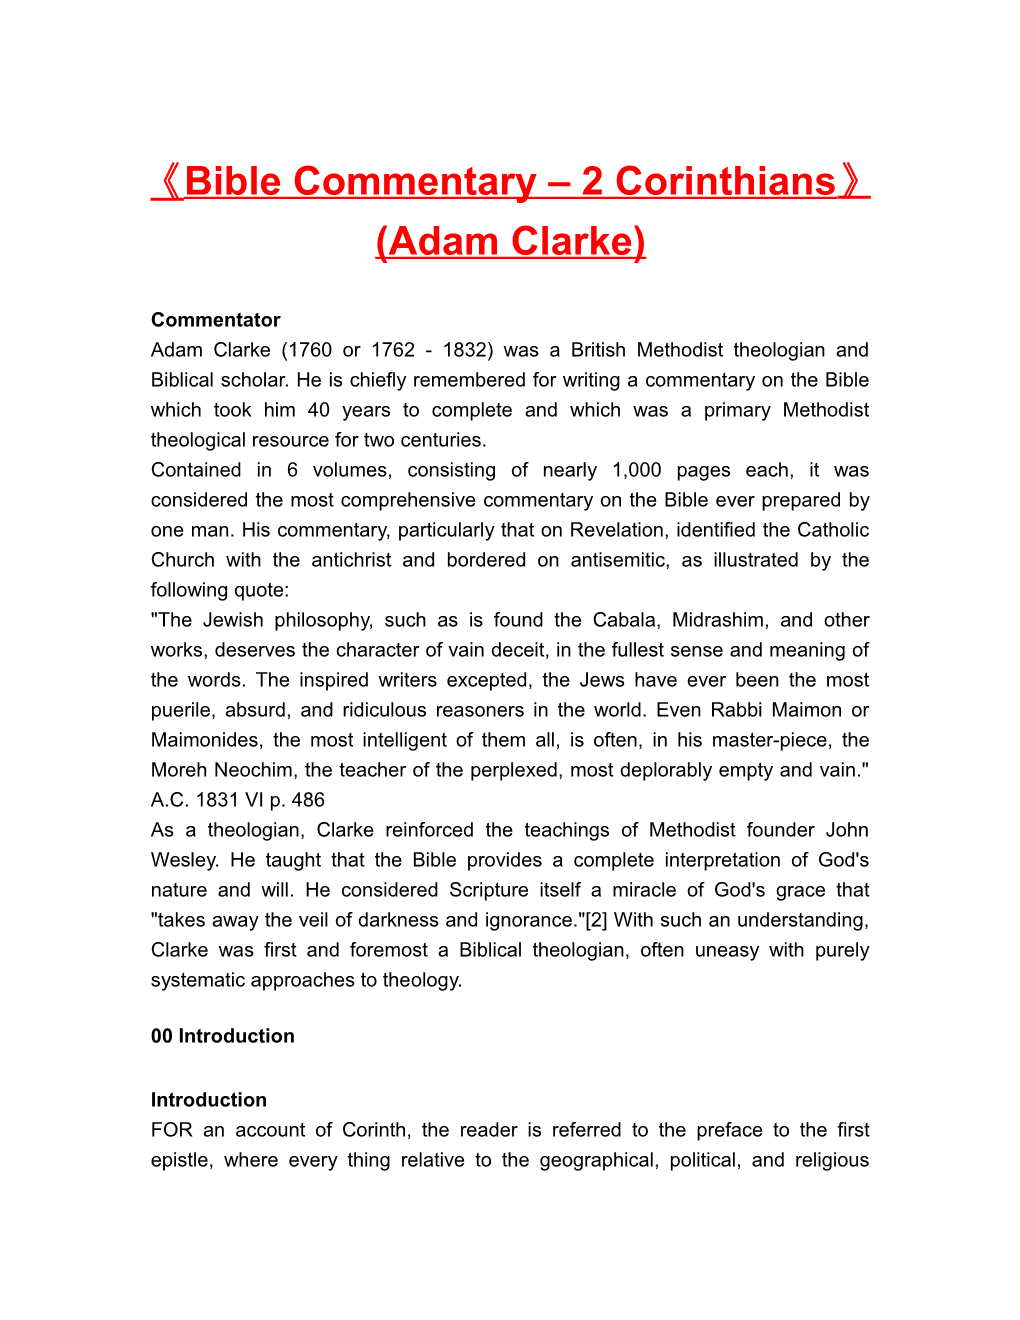 Bible Commentary 2 Corinthians (Adam Clarke)